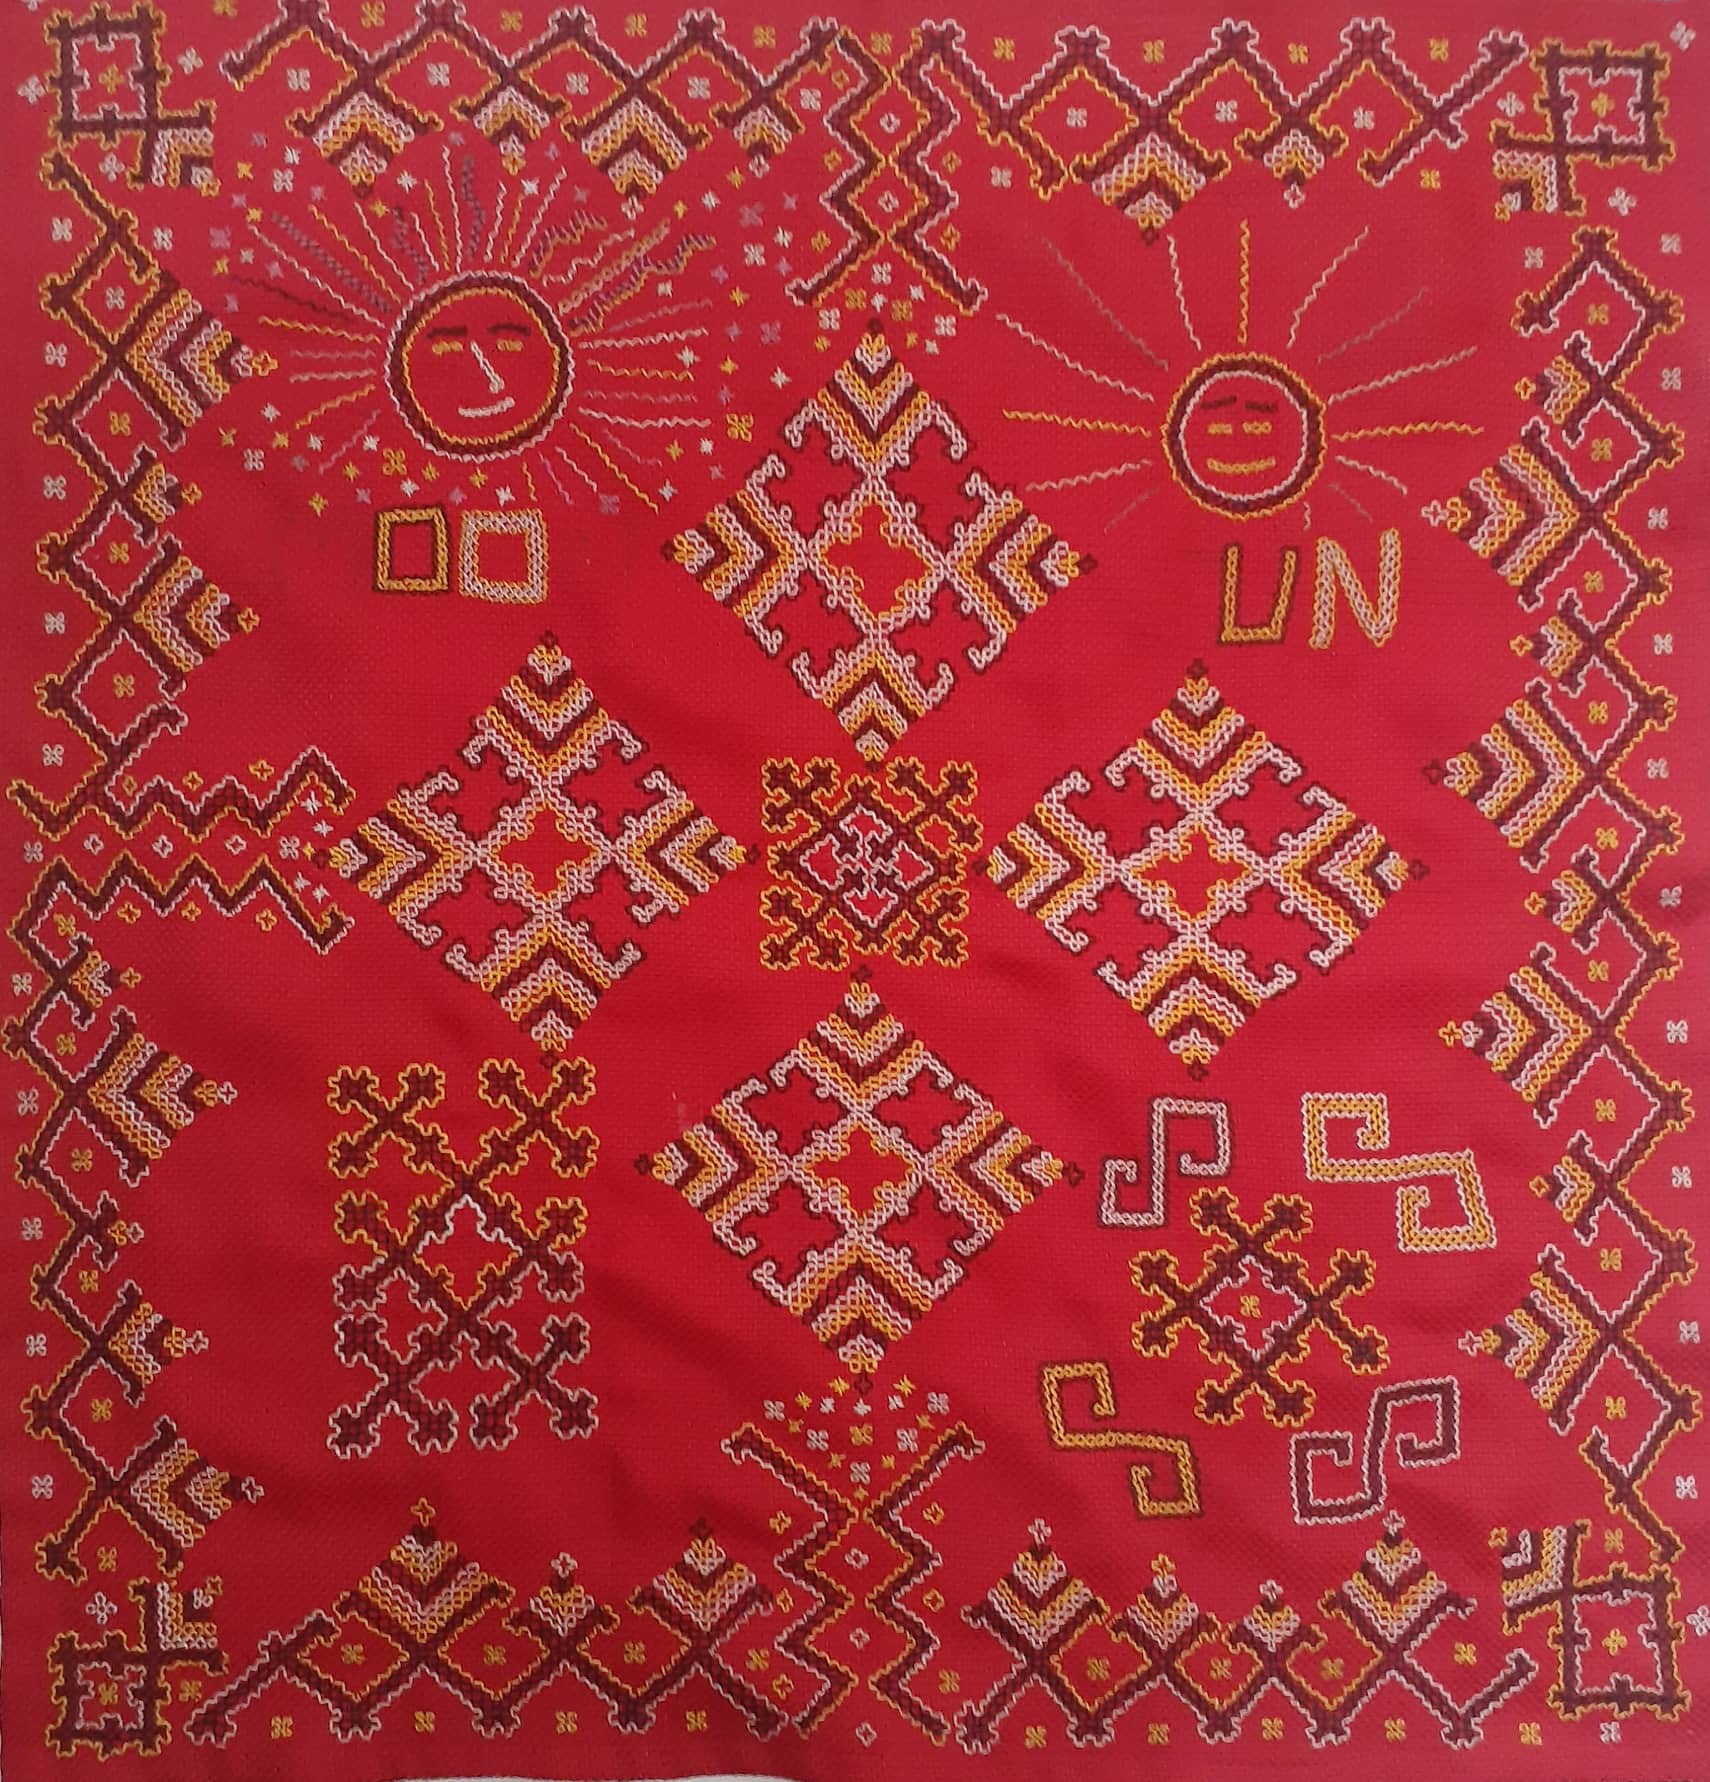 Manobo Suyam Embroidery, Wisdom Of Tribal Women Weavers In A Free ...